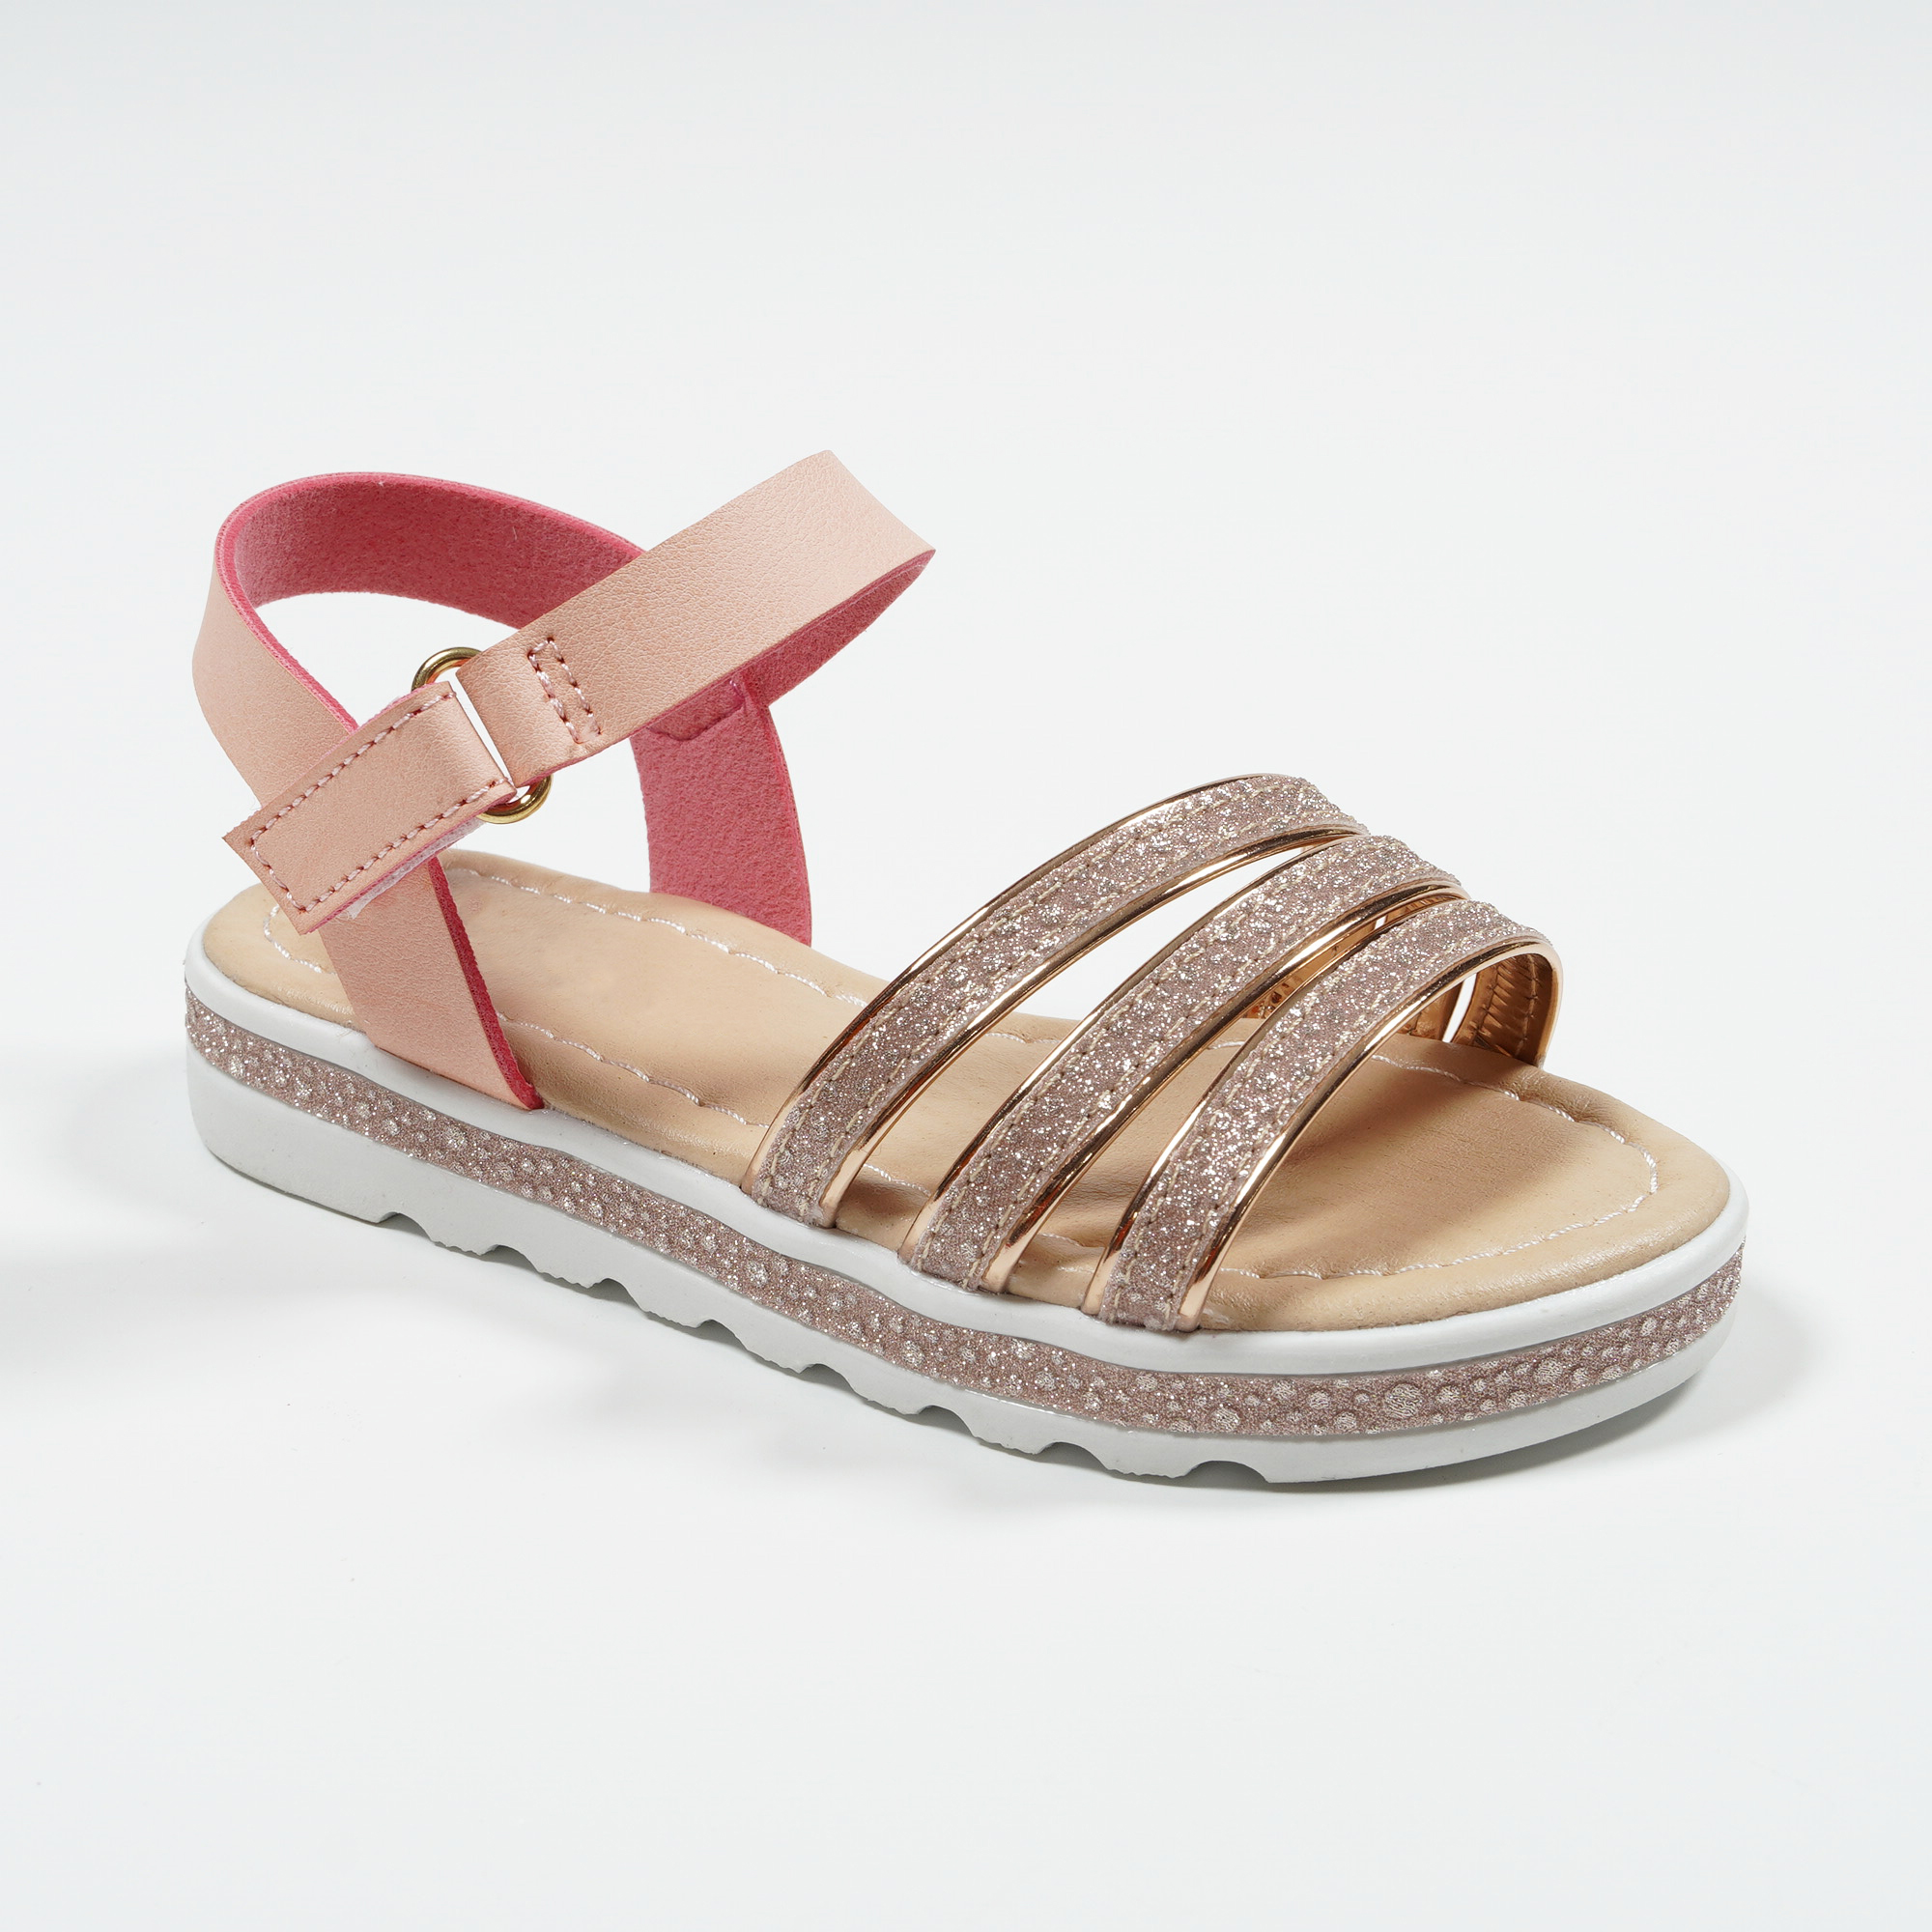 Nikoofly-New-Shiny-Sequins-Non-slip-Beach-Slippers-Glitter-Girls-Sandals-YDX0562K-3-pink